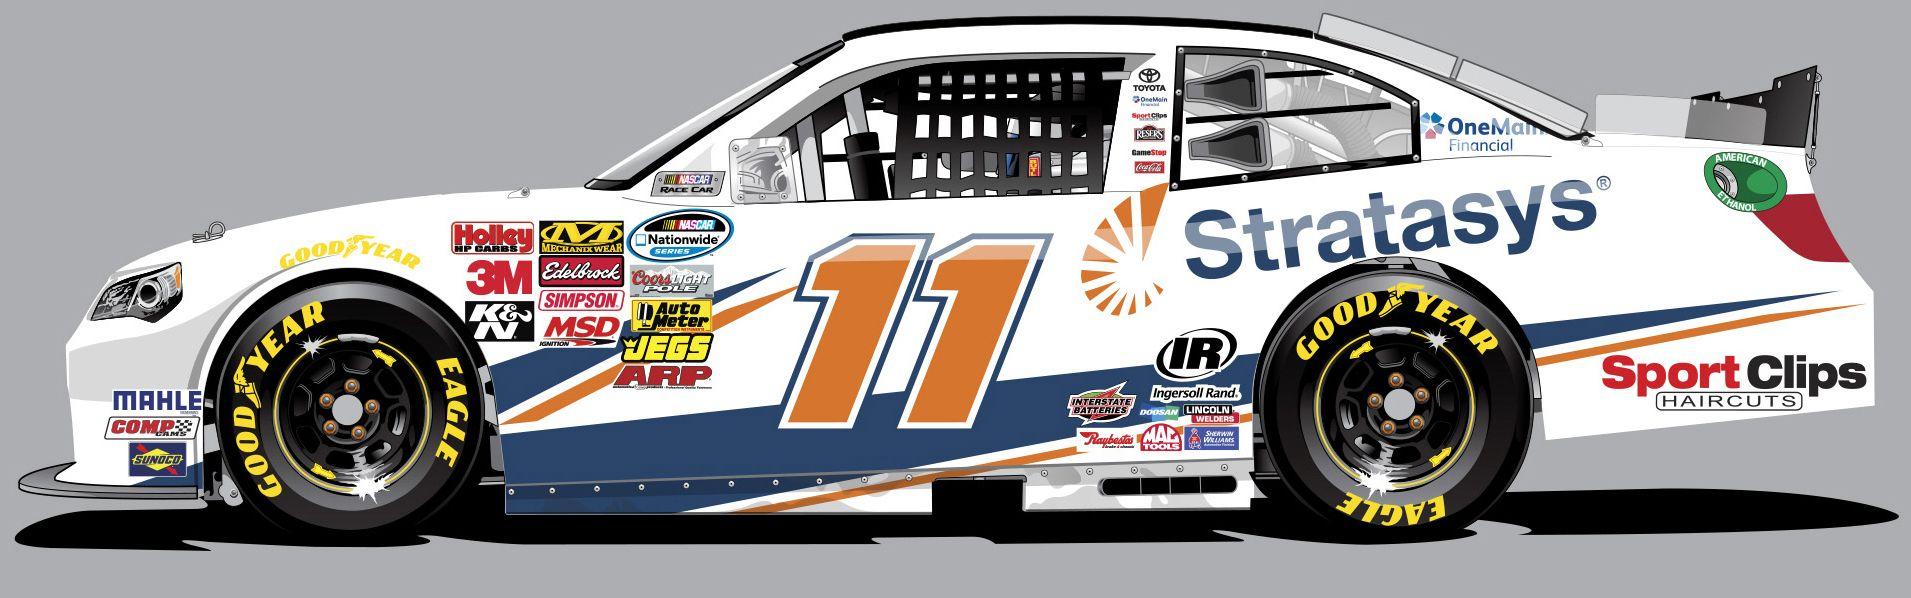 NASCAR Nationwide Series Logo - Stratasys Sponsors NASCAR Nationwide Car in the U.S. Cellular 250 at ...